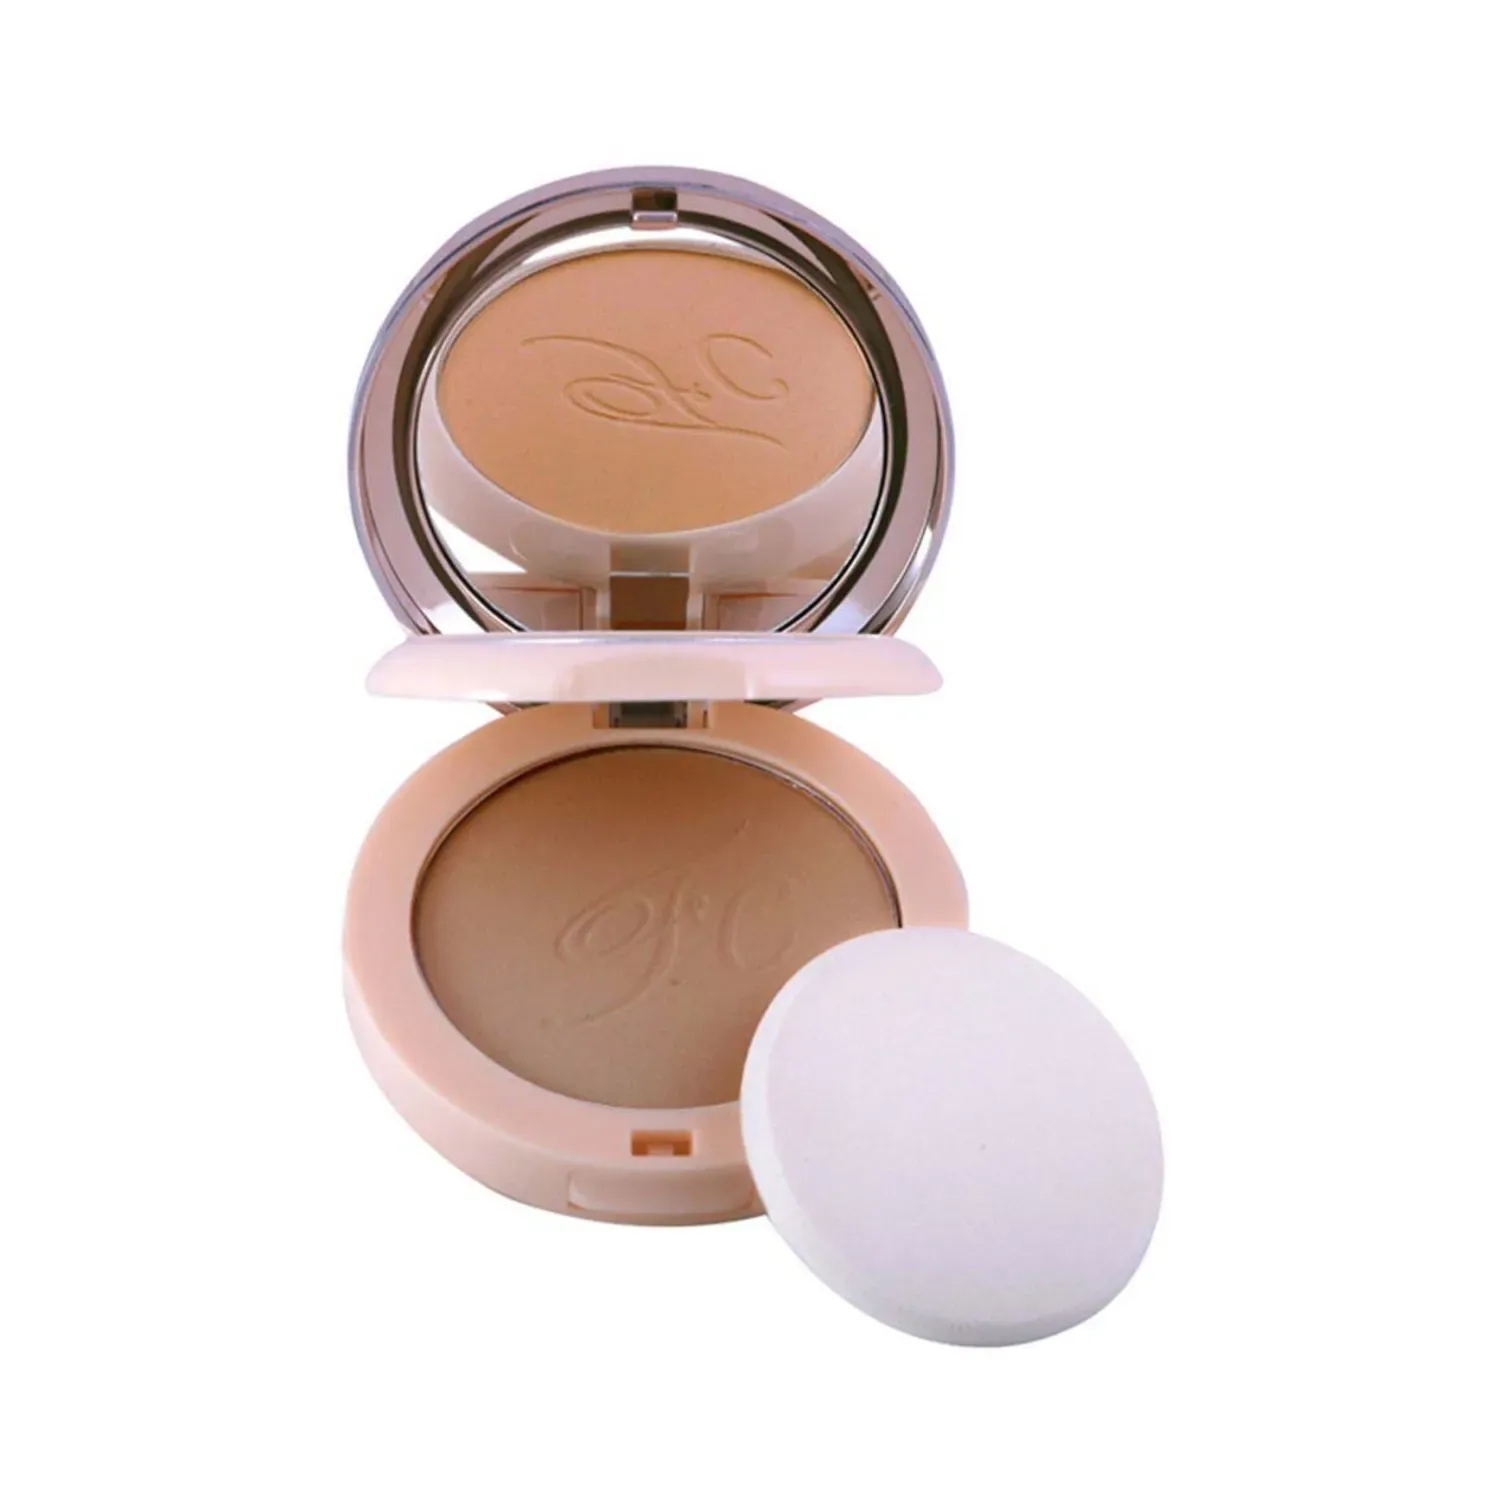 Fashion Colour | Fashion Colour Nude Makeover 2-In-1 Compact Face Powder - 06 Shade (20g)